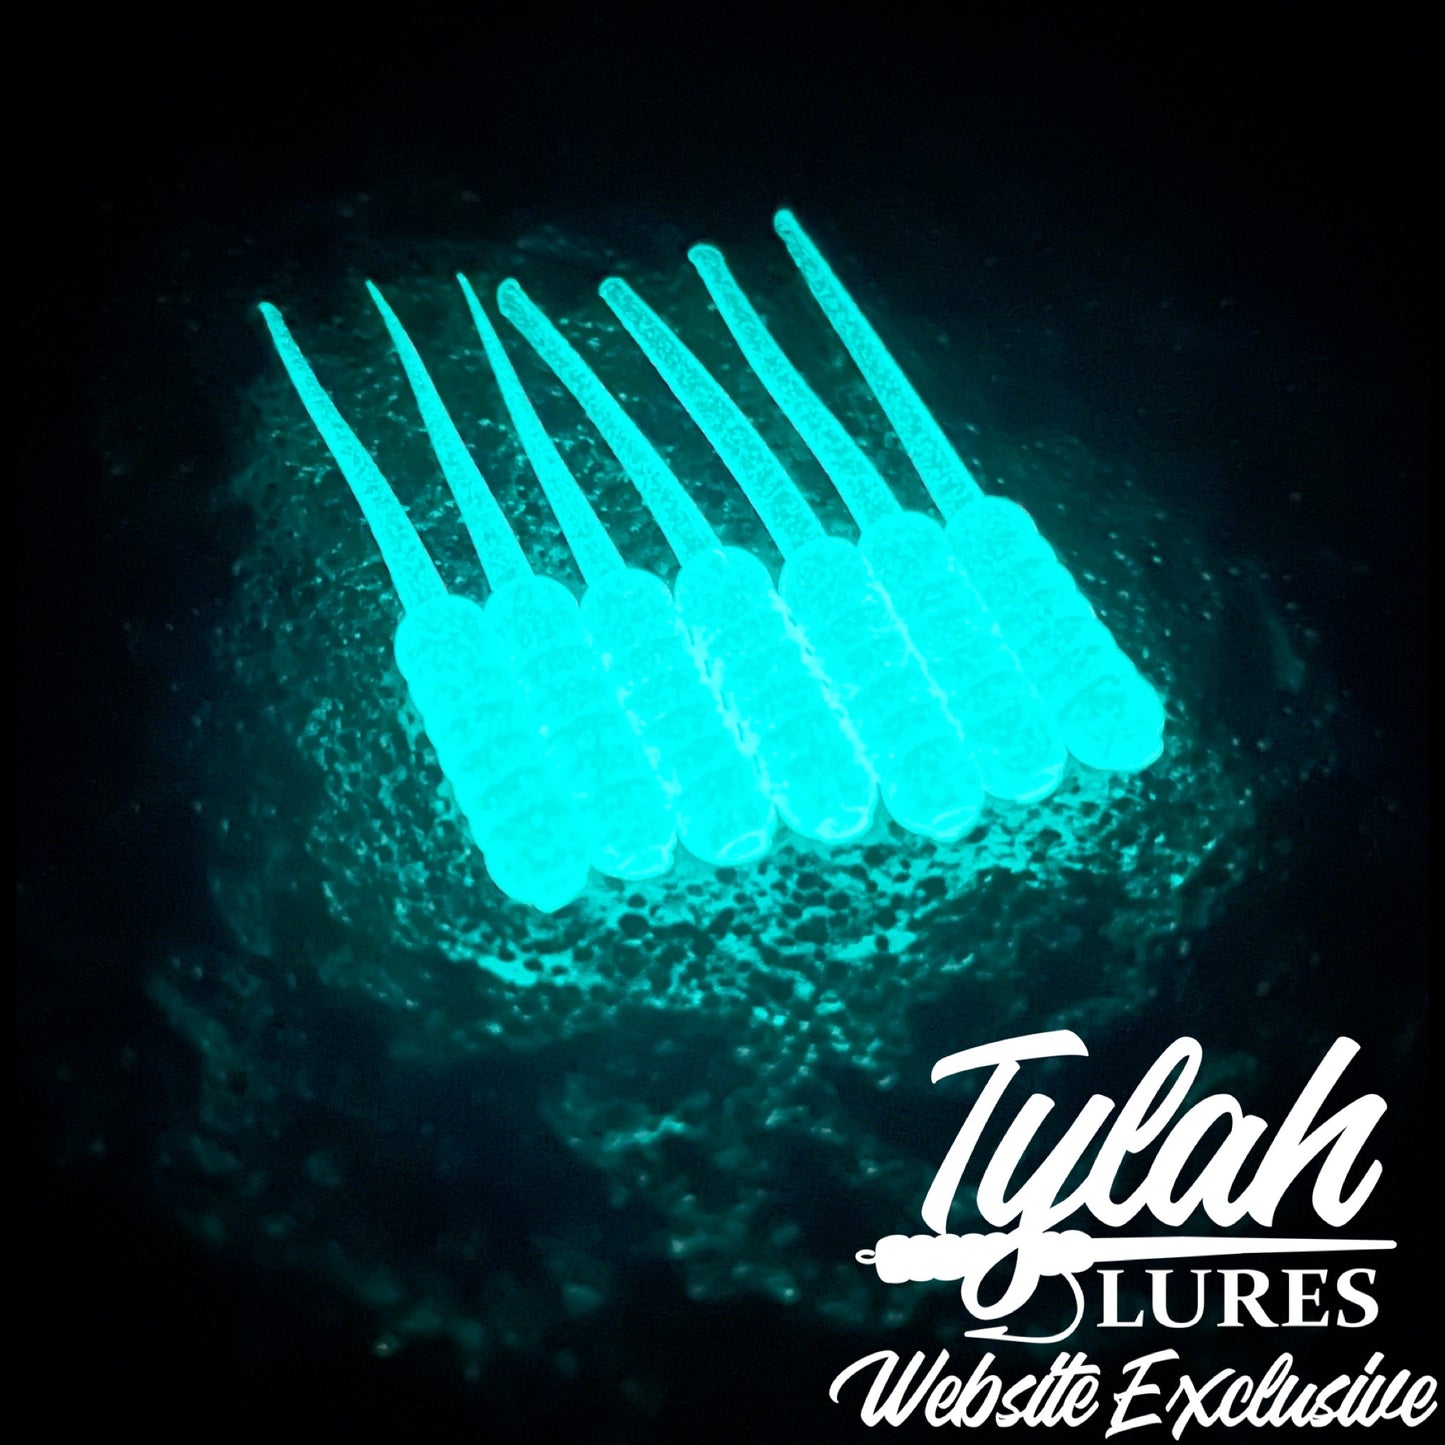 TylahLures Website Exclusive UV Blue Glow 1.5in.